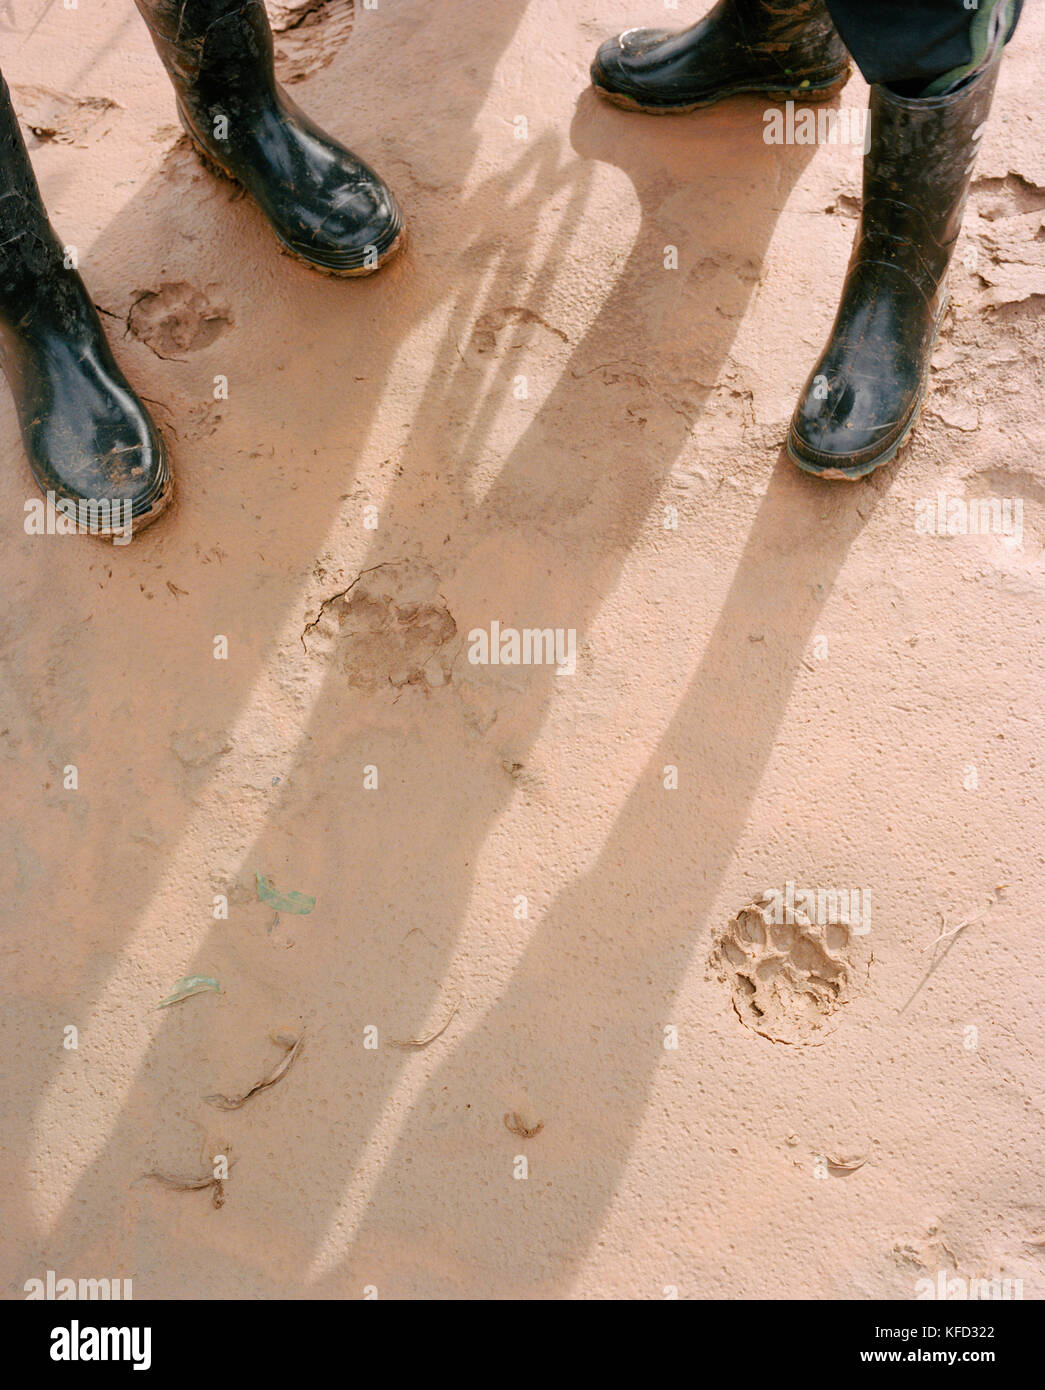 PERU, Amazon Rainforest, South America, Latin America, high angle view of human legs by footprints Stock Photo